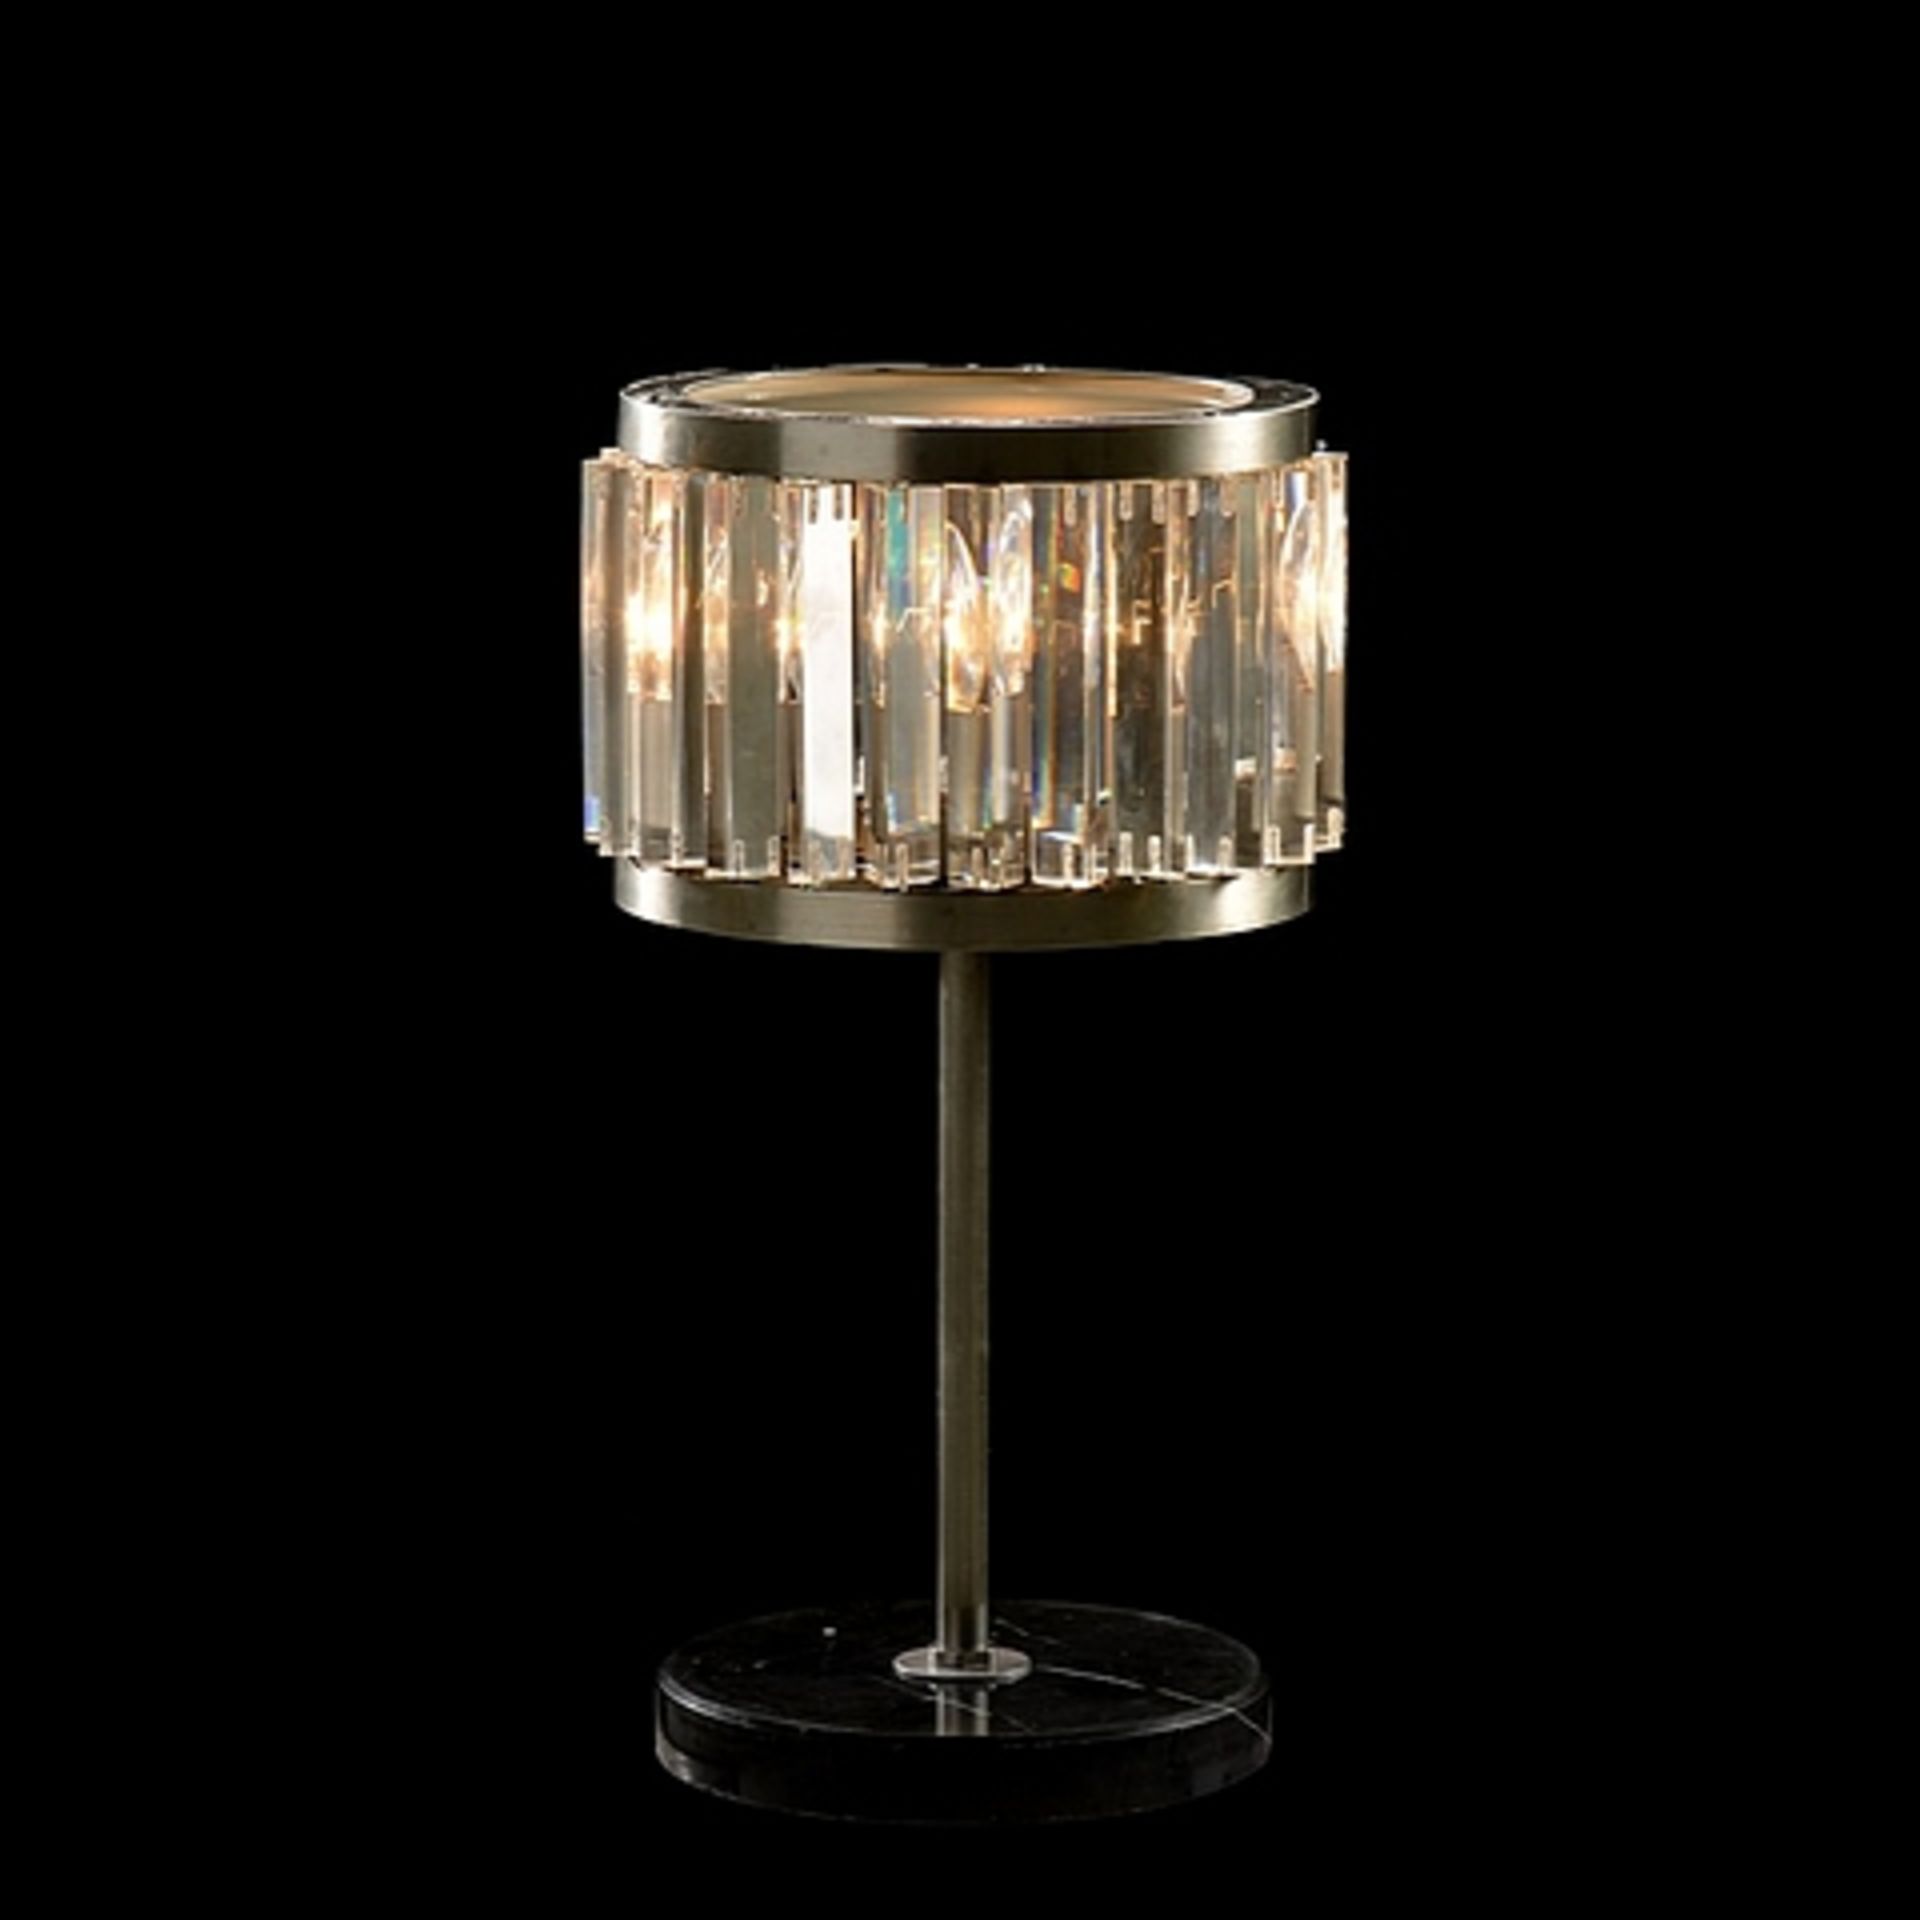 Rex table lamp 30 x 30 x 55cm The Oscar-worthy Rex celebrates the 1920’s era of opulence and